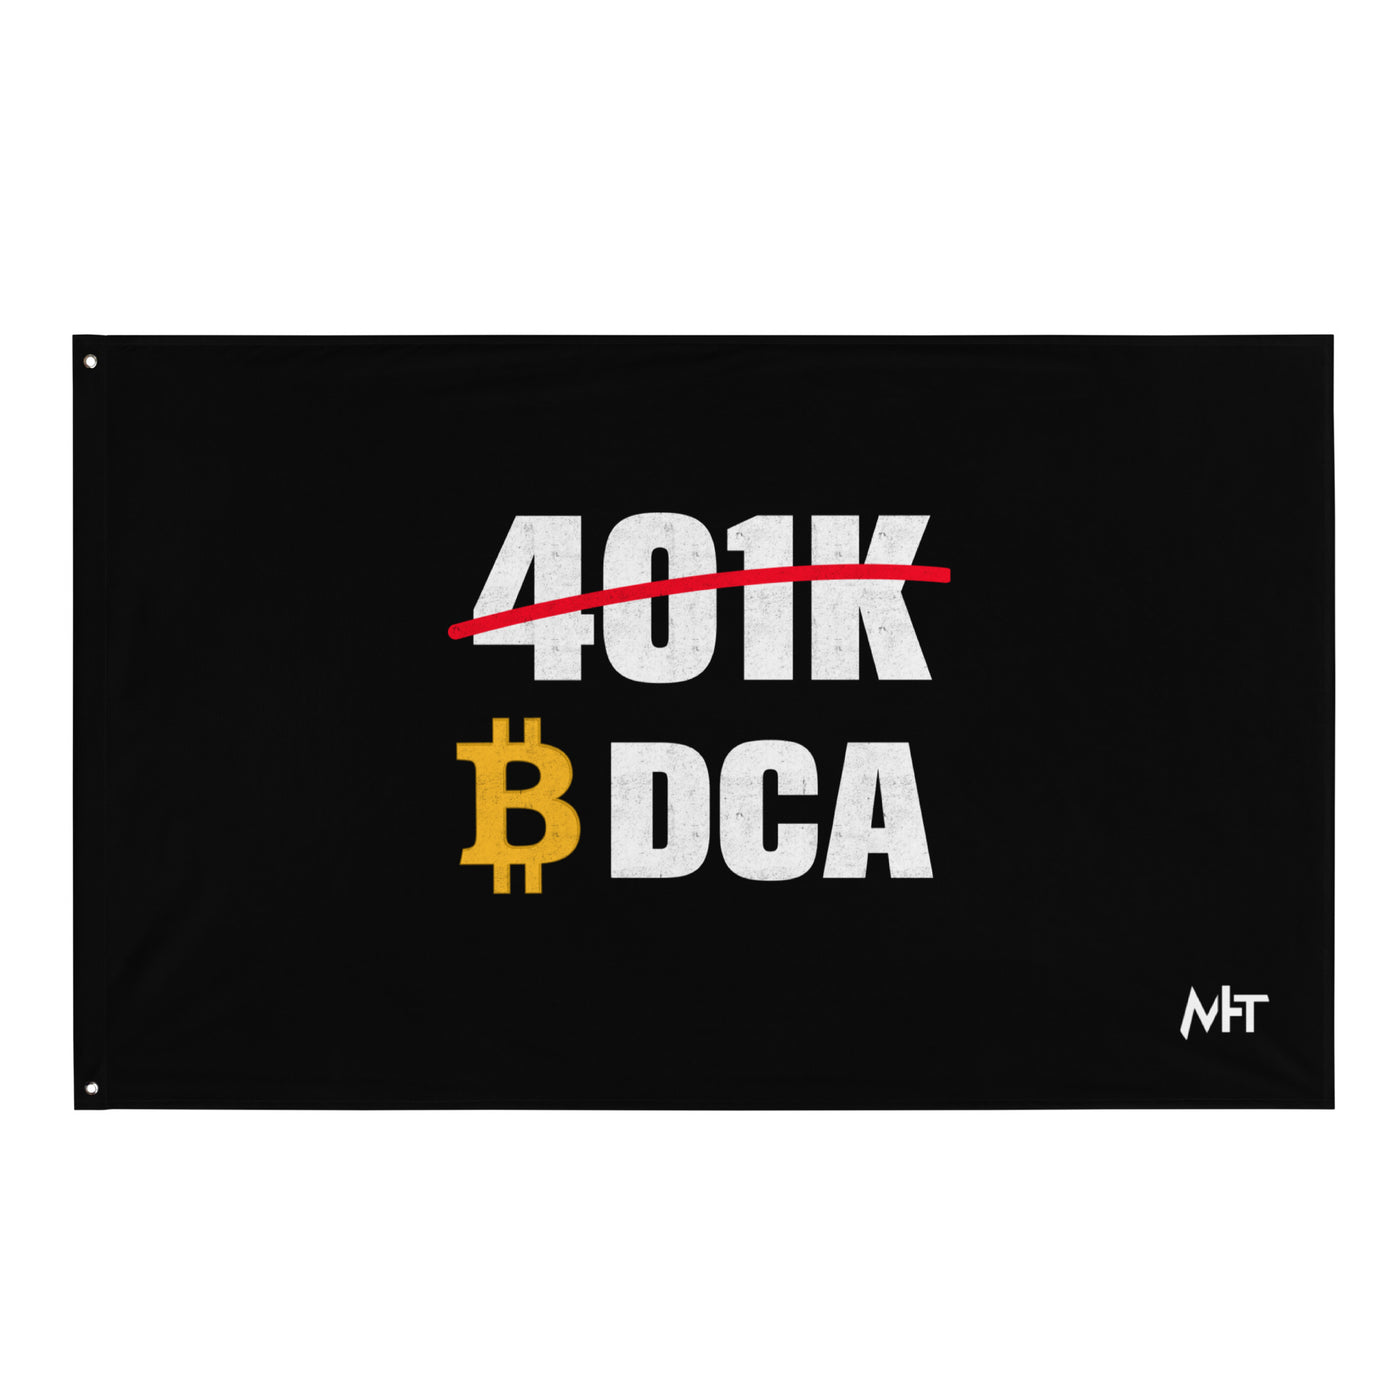 401K Bitcoin DCA Flag